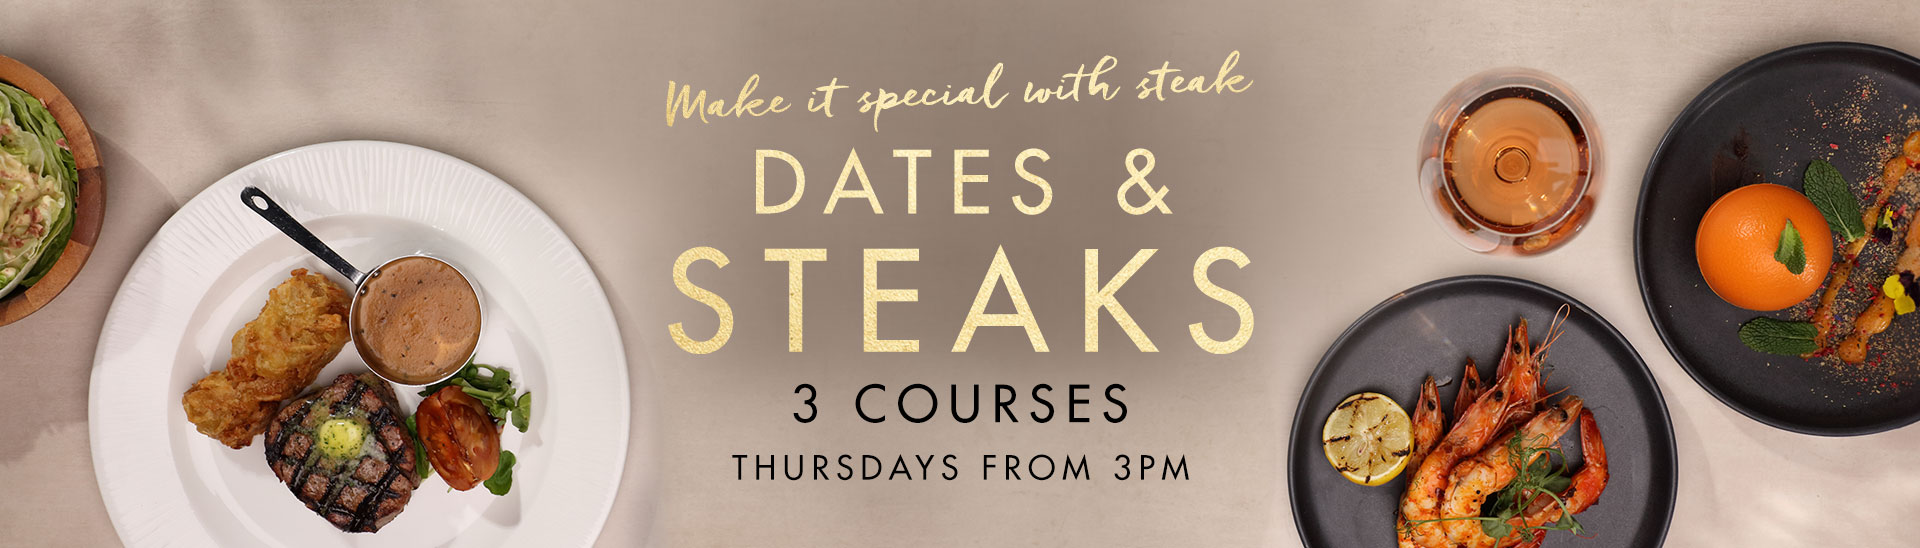 Dates & Steaks at Miller & Carter Wollaton